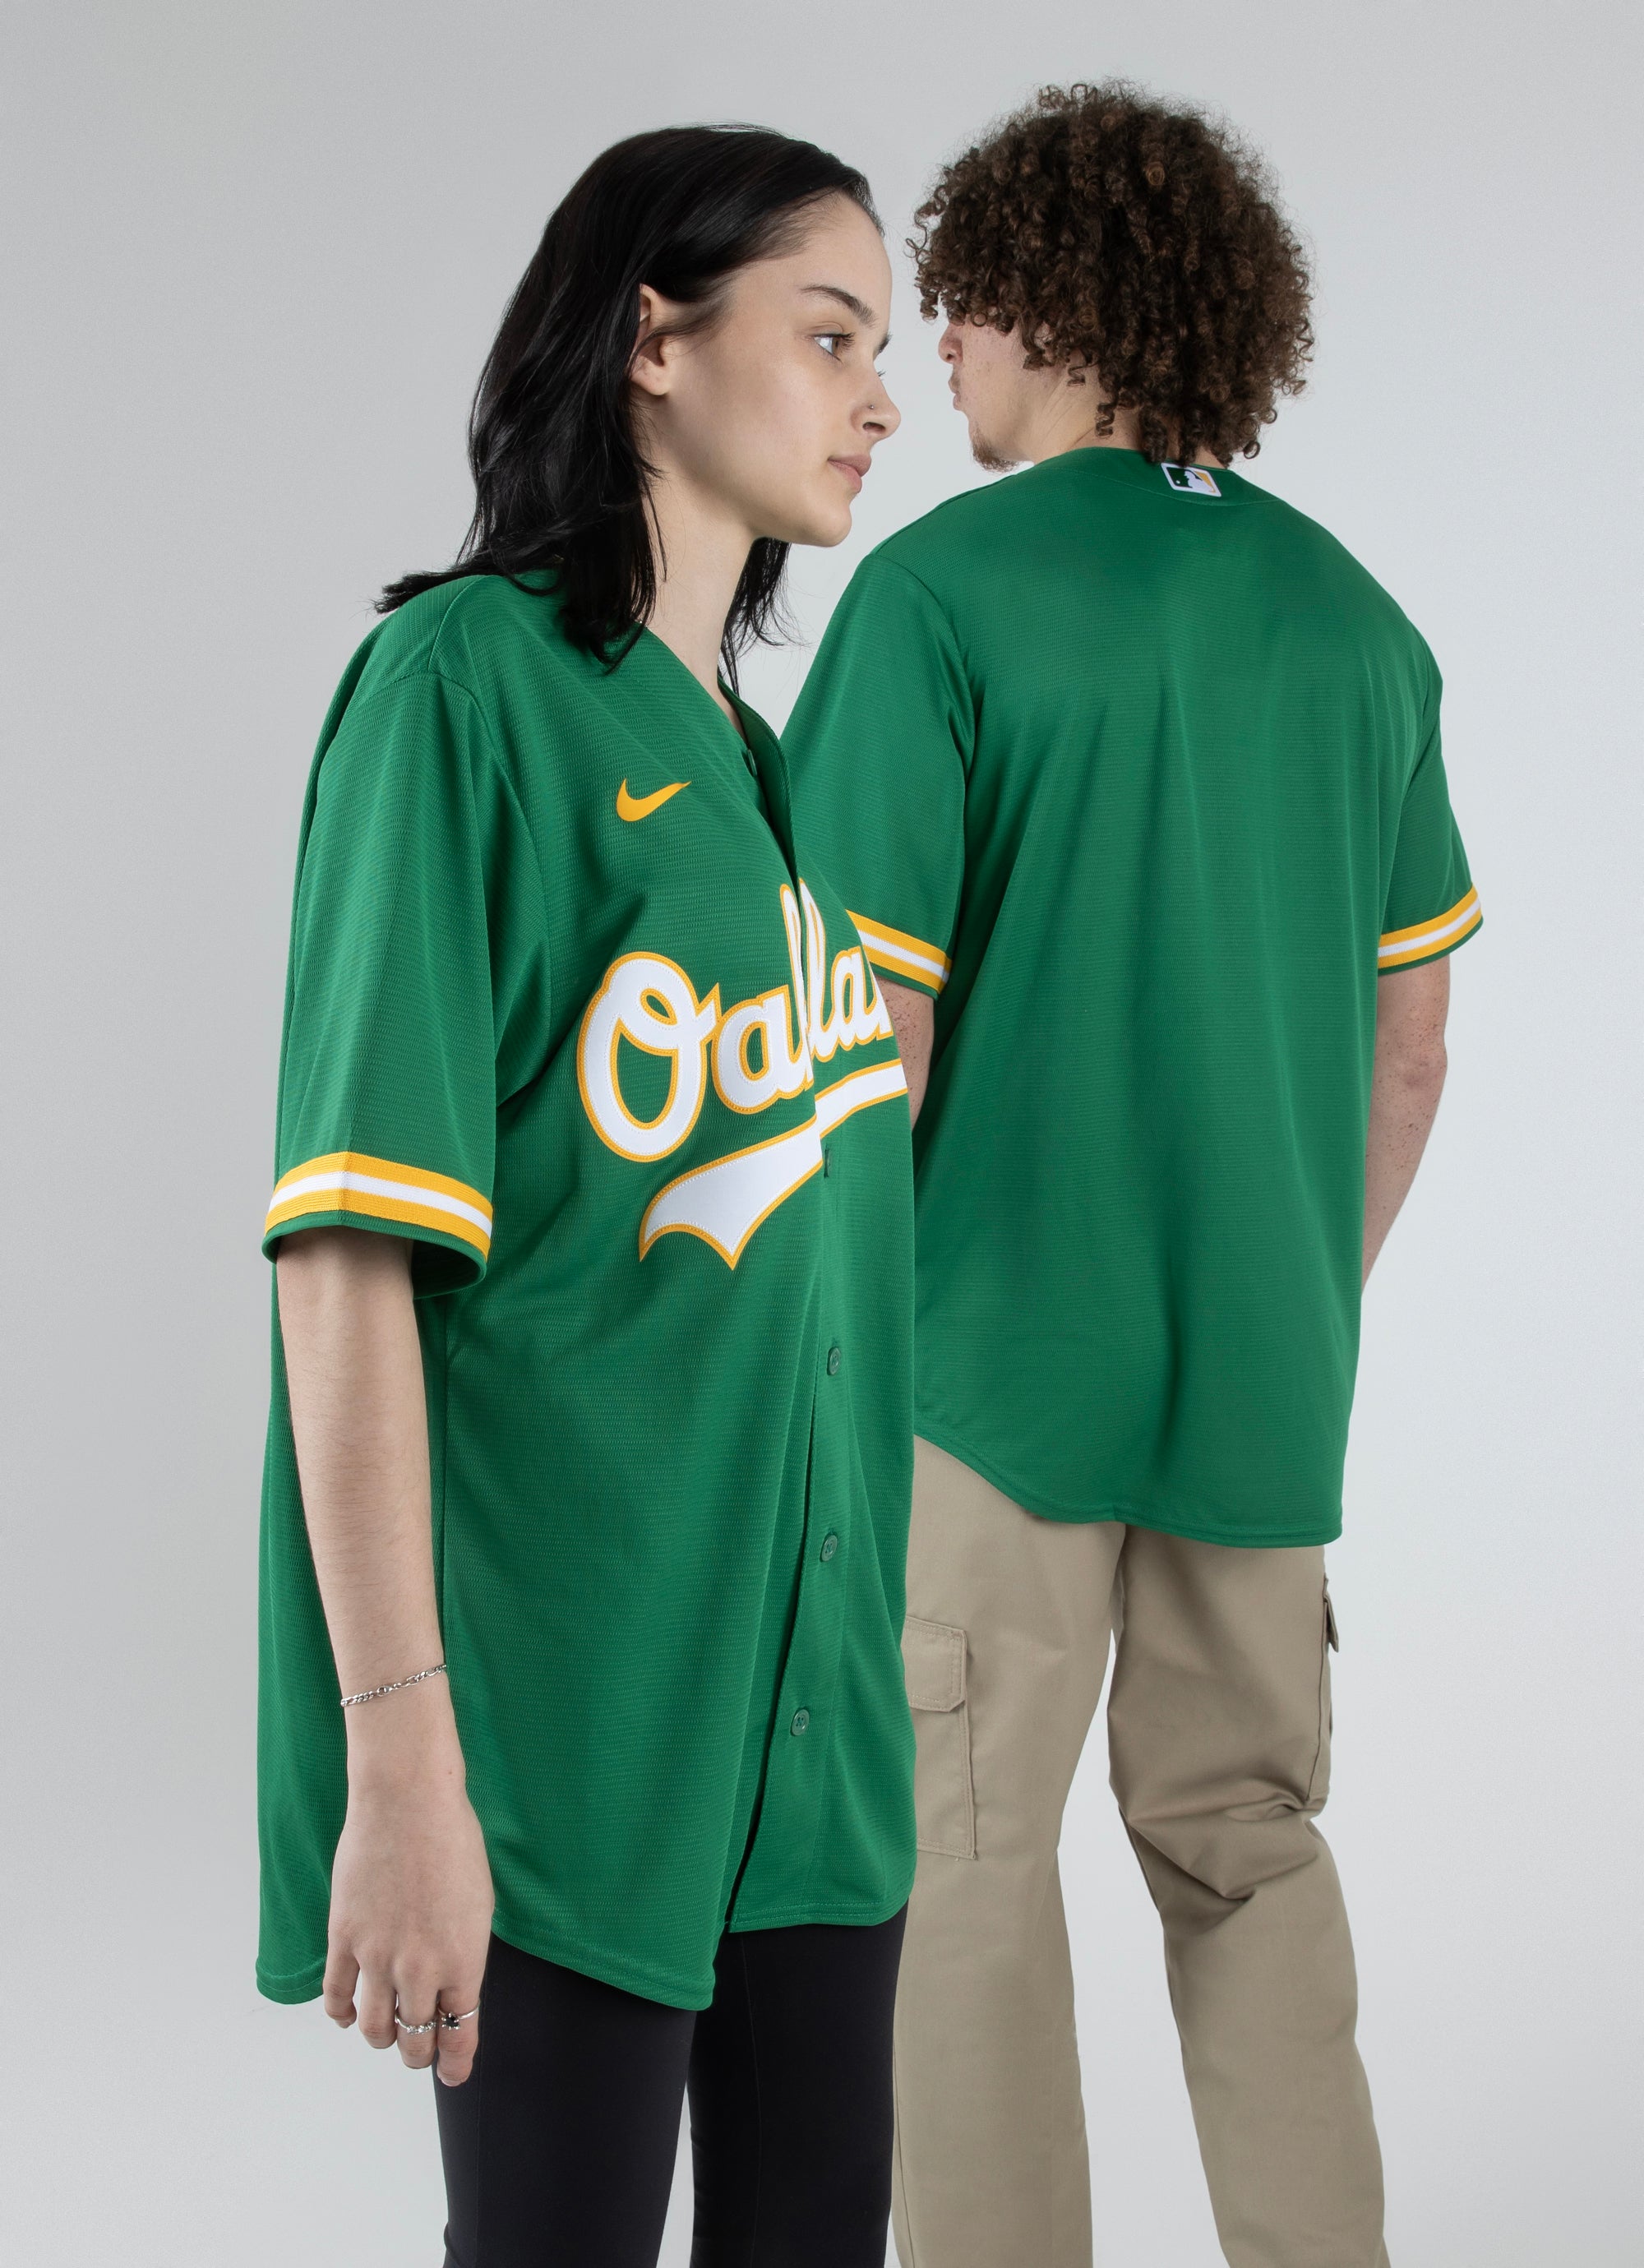 Oakland Athletics Nike Official Replica Alternate Jersey - Mens